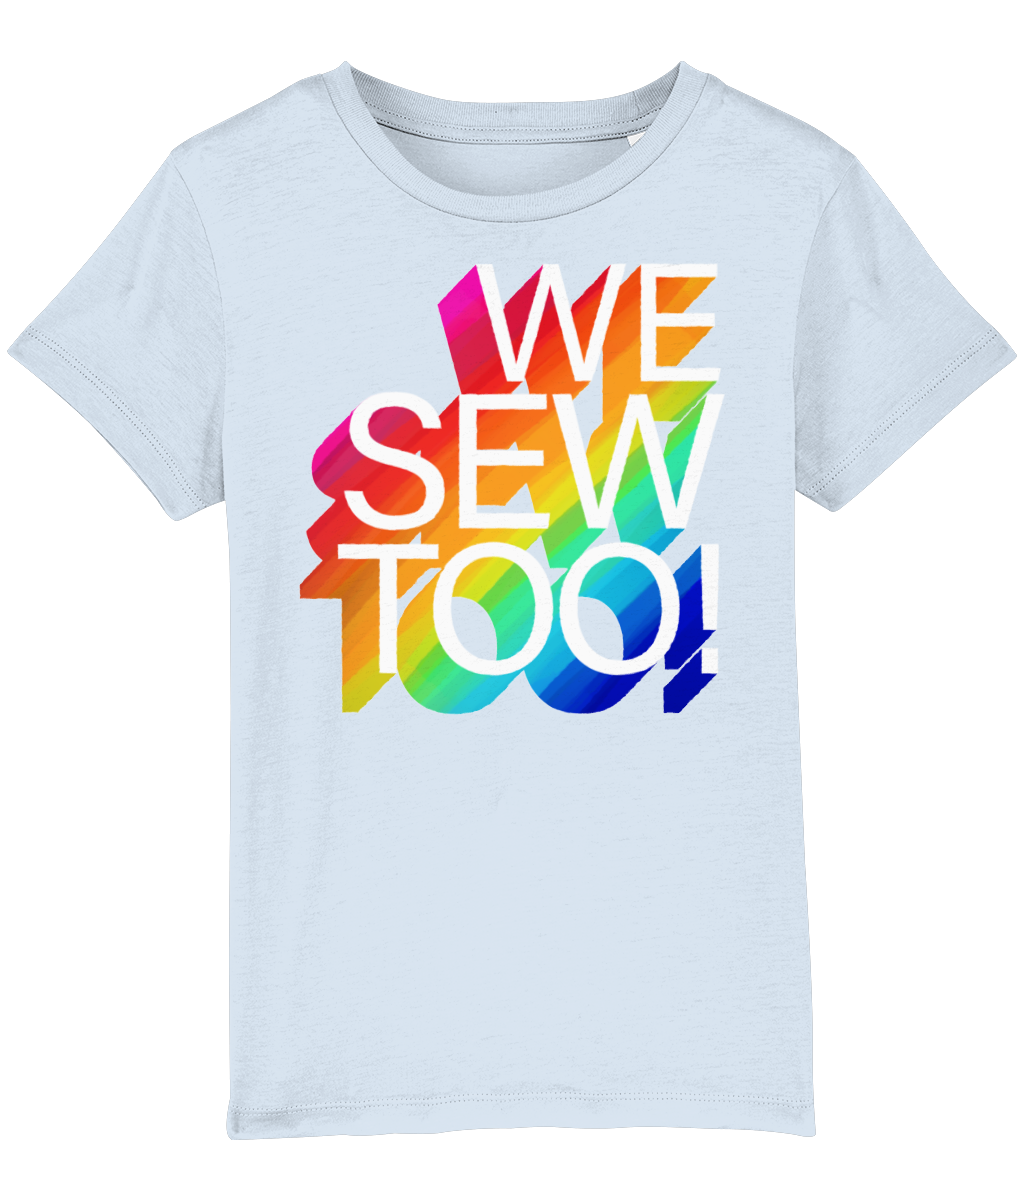 We Sew Too Kids T-Shirt